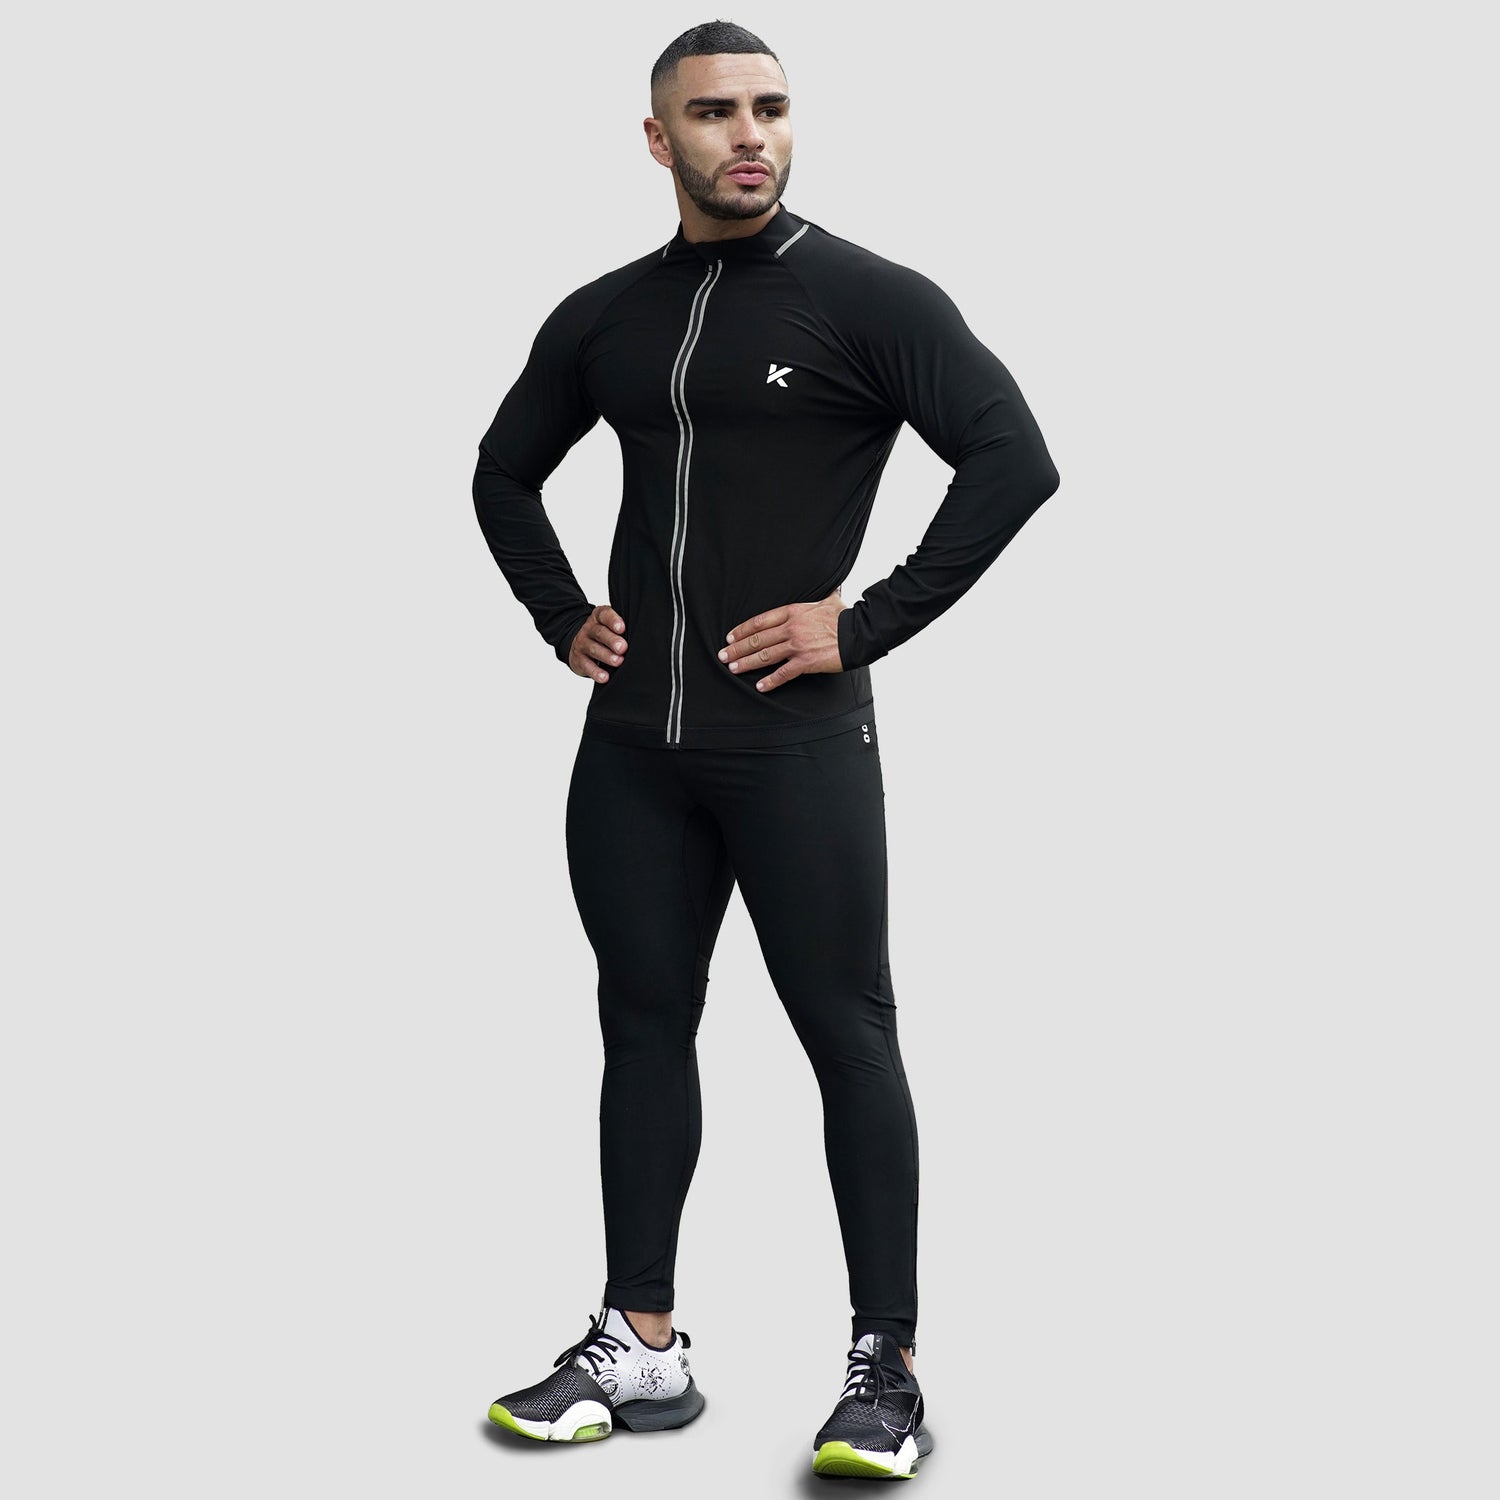 Achieve Your Fitness Goals with Kewlioo Sauna Suit